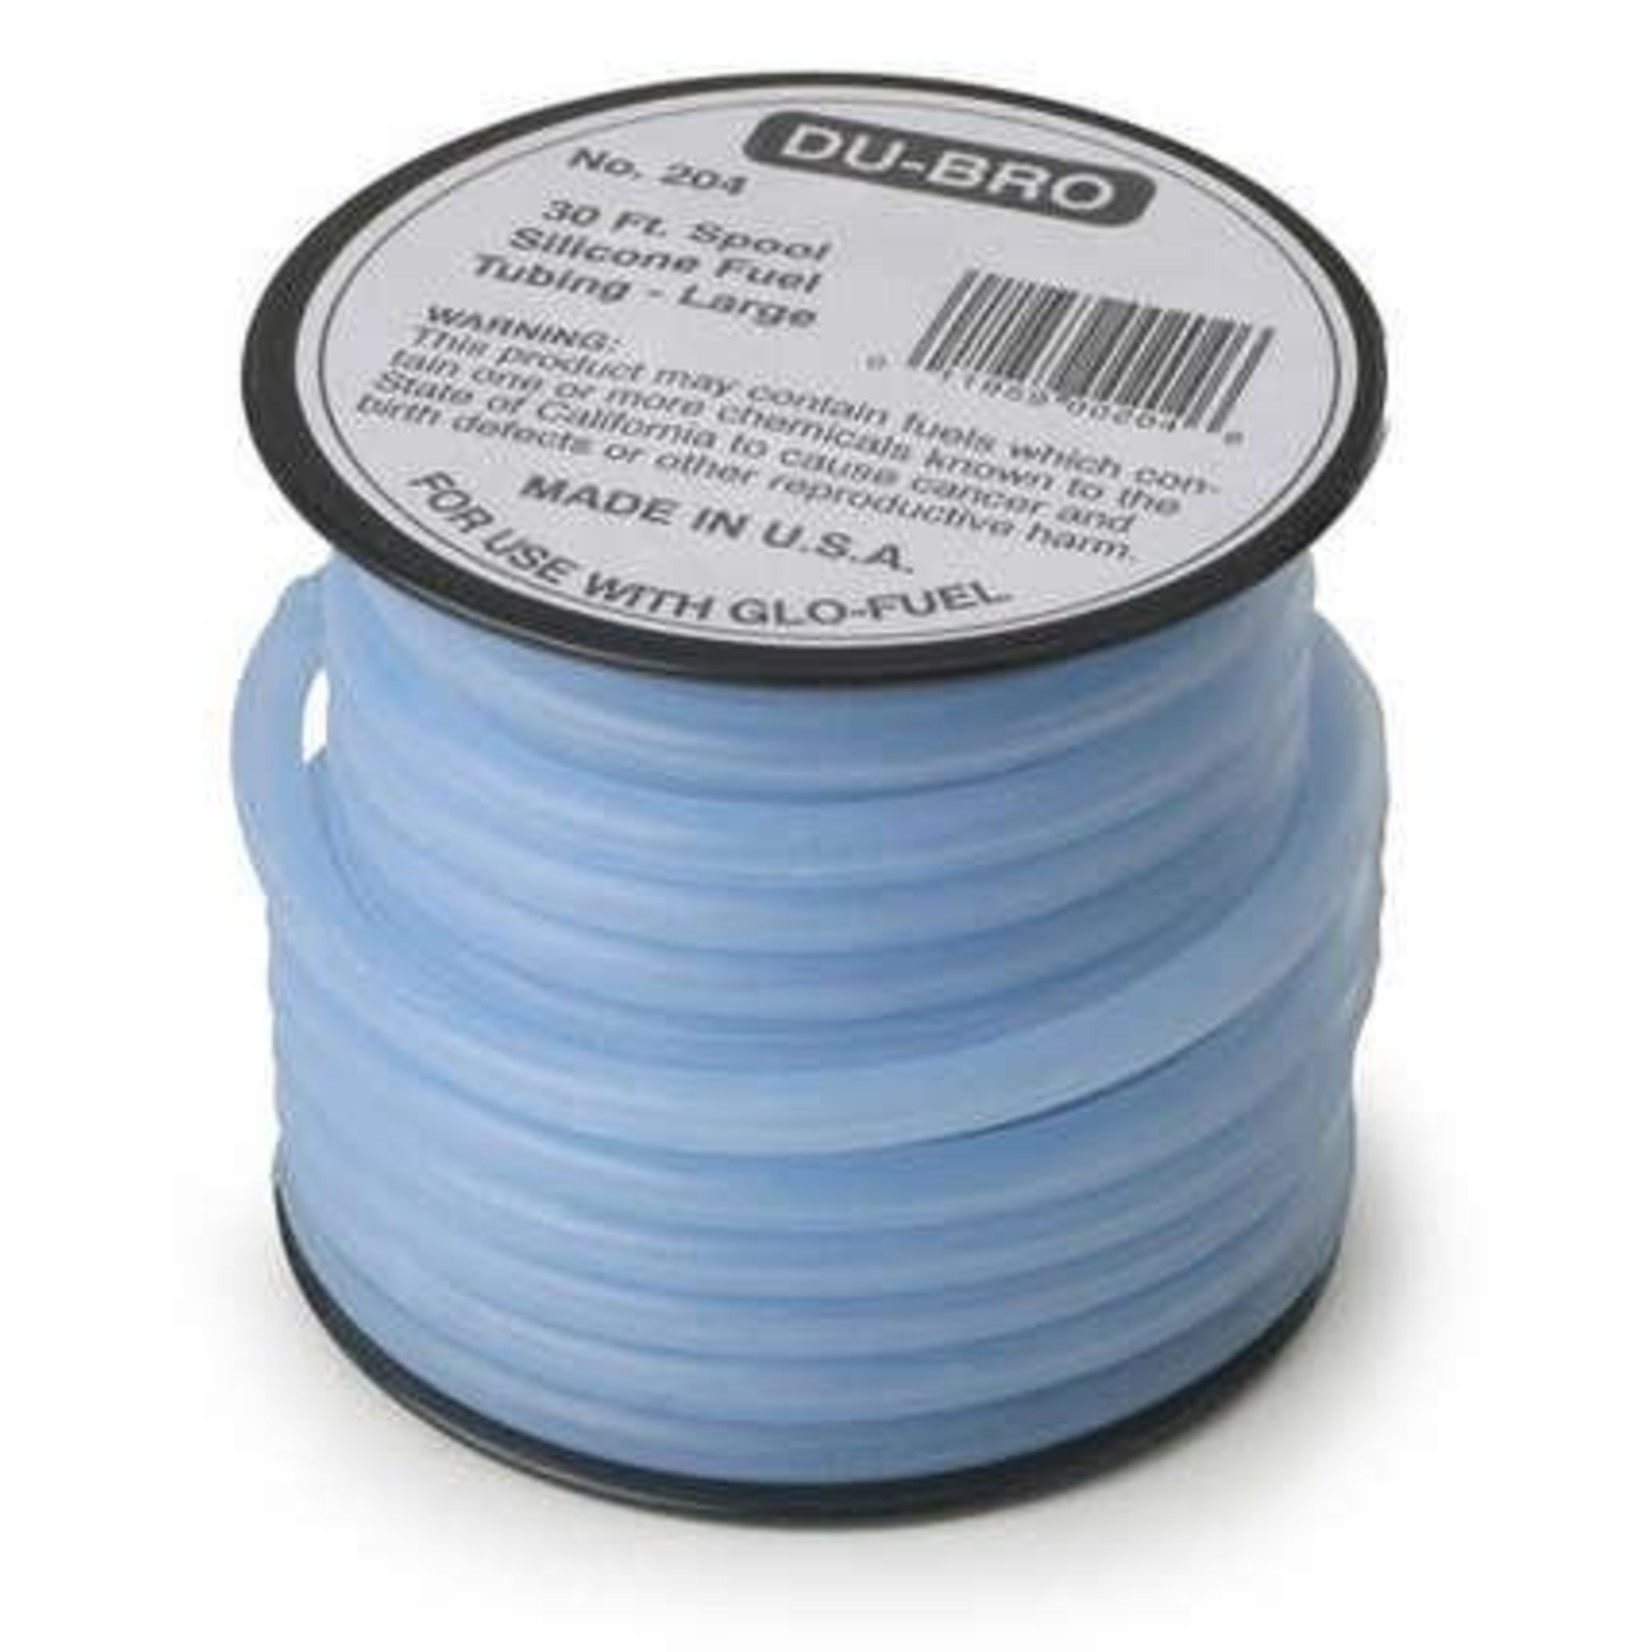 Dubro Super Blue Silicone Tubing Large (5/32" ID) 25' Spool